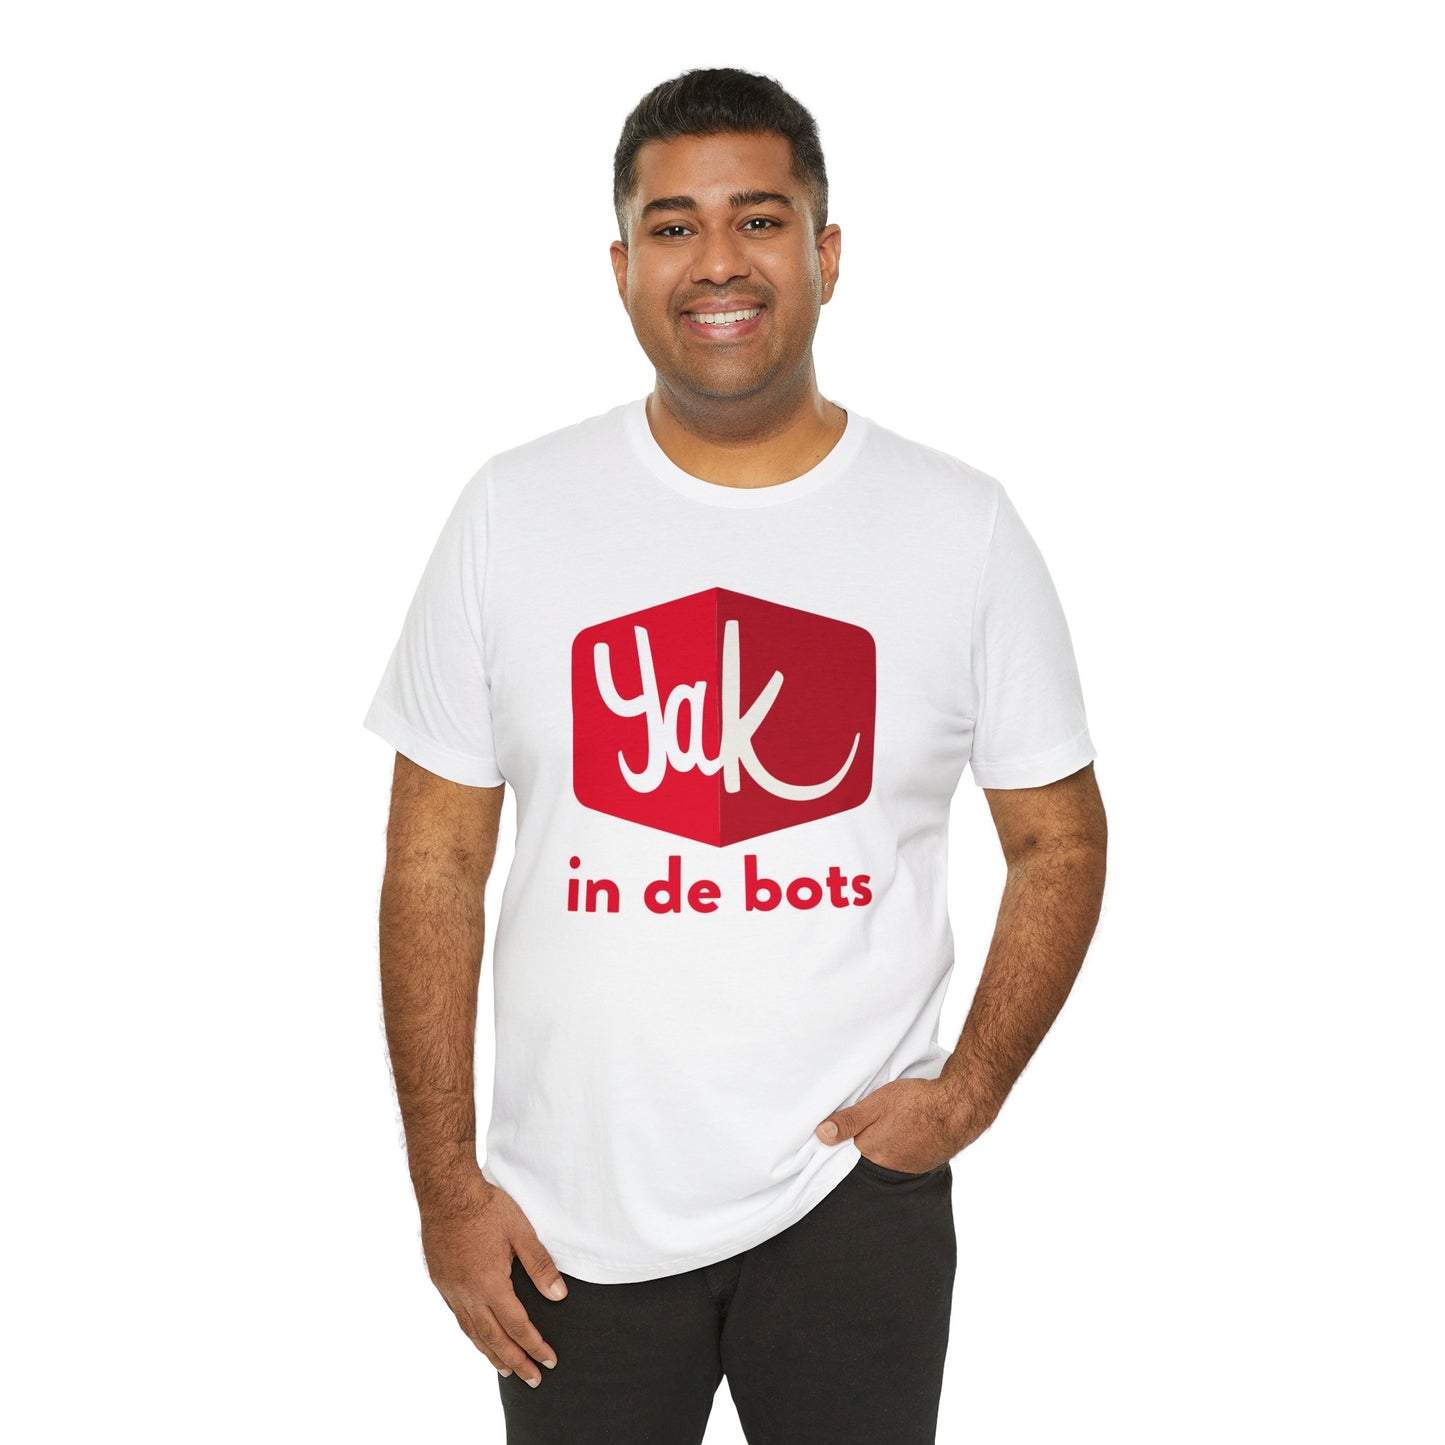 Yak in da bots T-Shirt - Jack In The Box Hispanic Parody